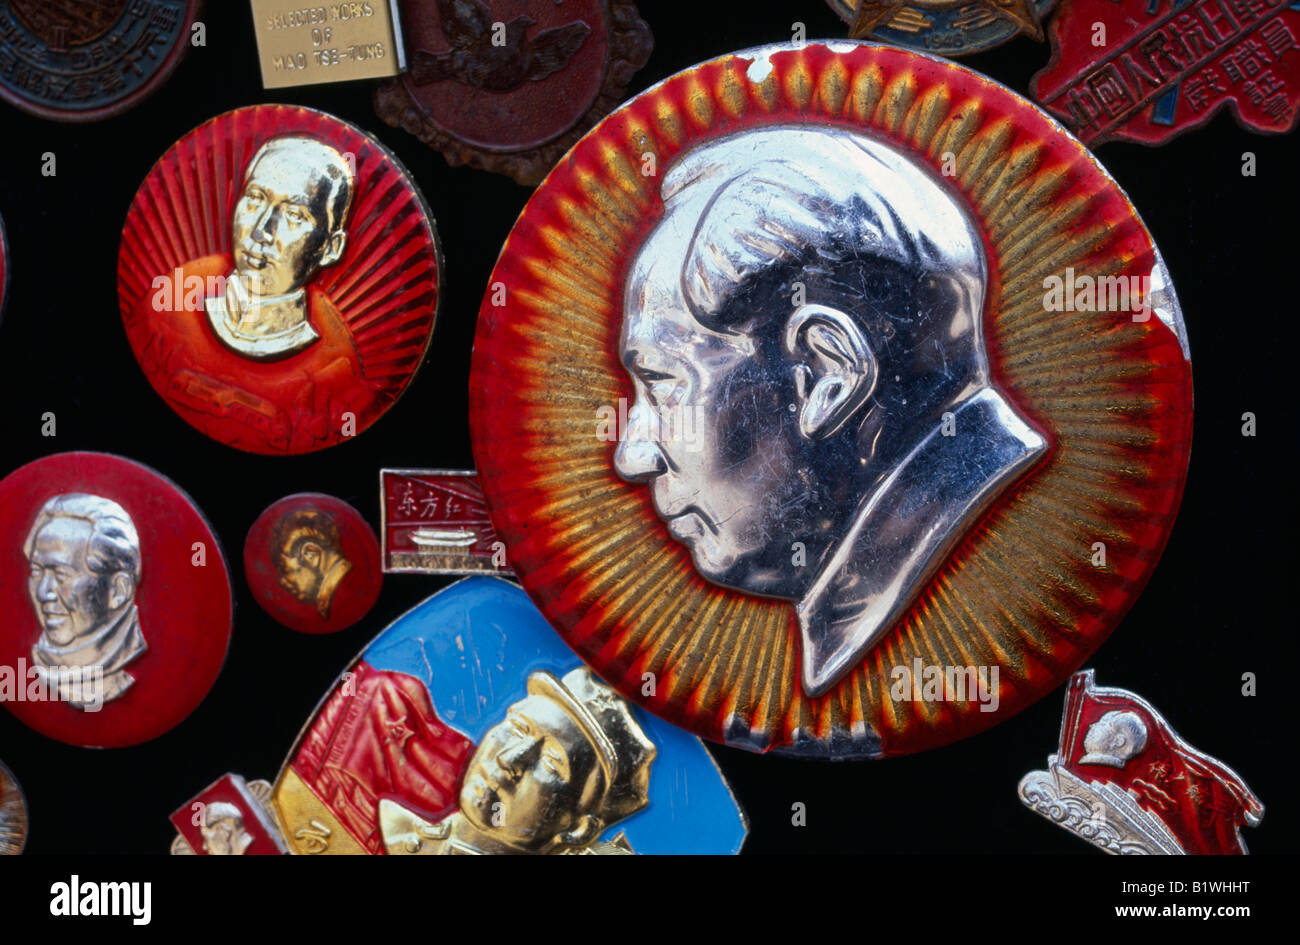 CHINA Asia Shanghai Chairman Mao Zedong or Mao Tse-Tung Communist revolutionary memorabilia metal badges as souvenirs Stock Photo